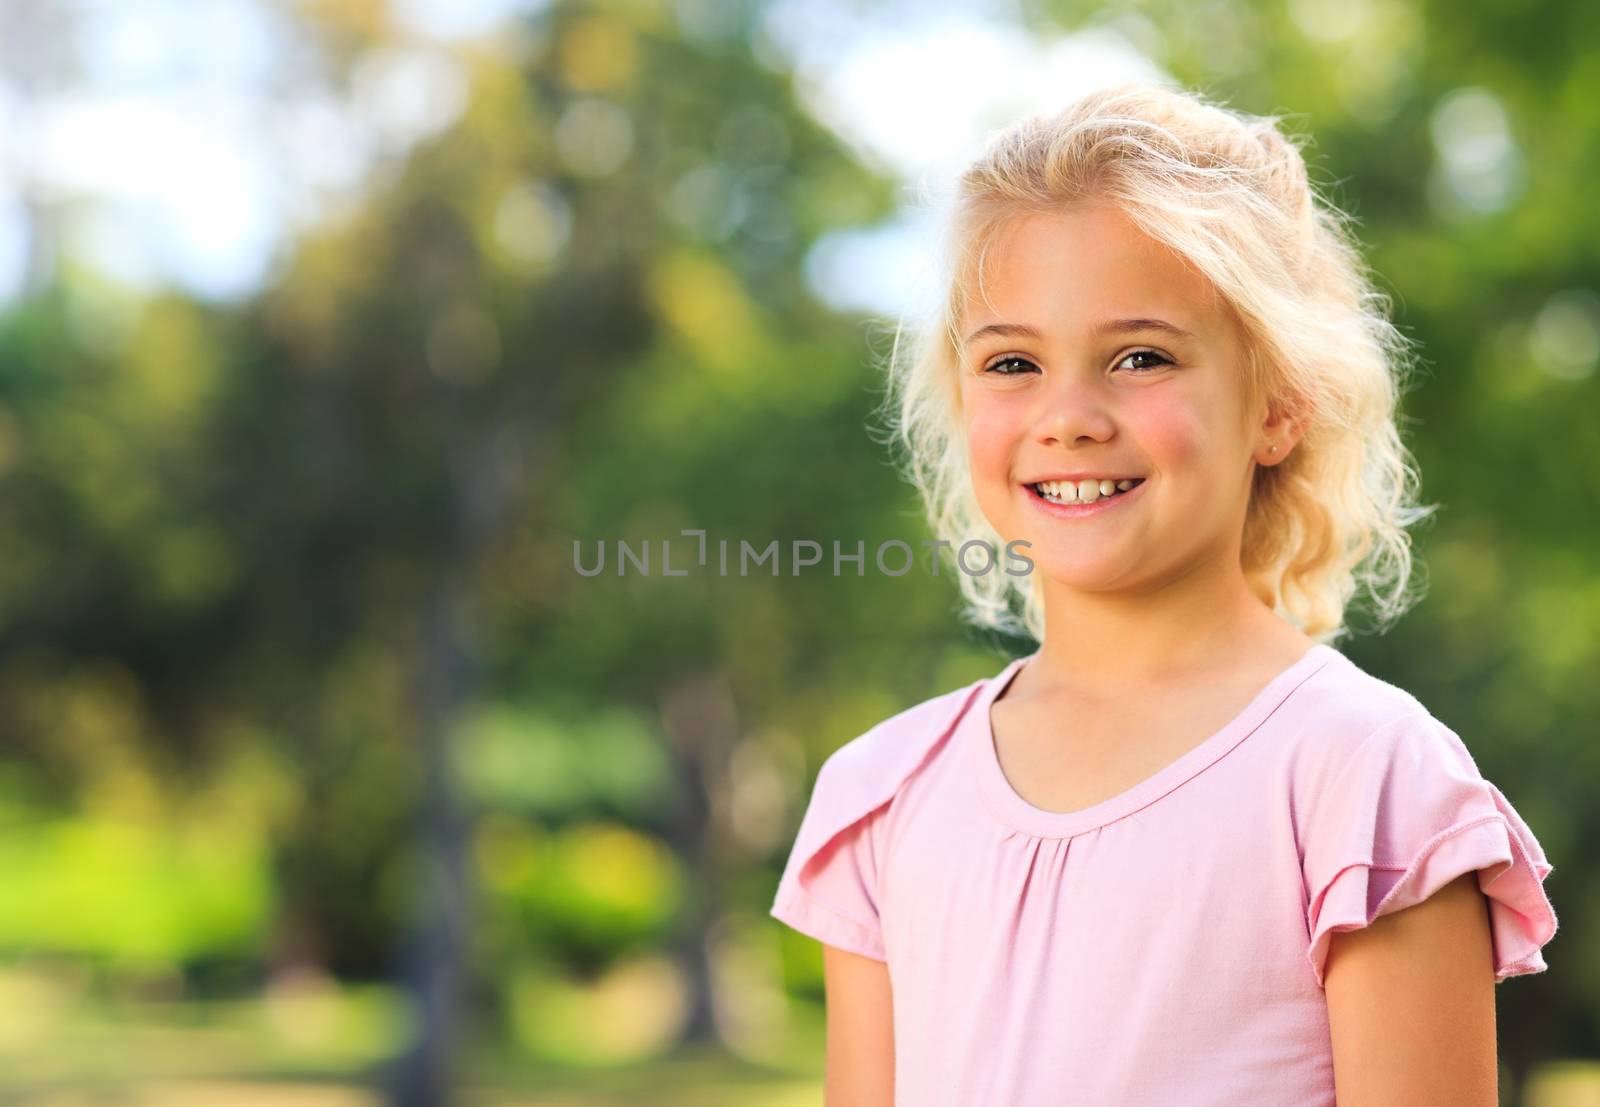 Little girl in the park by Wavebreakmedia